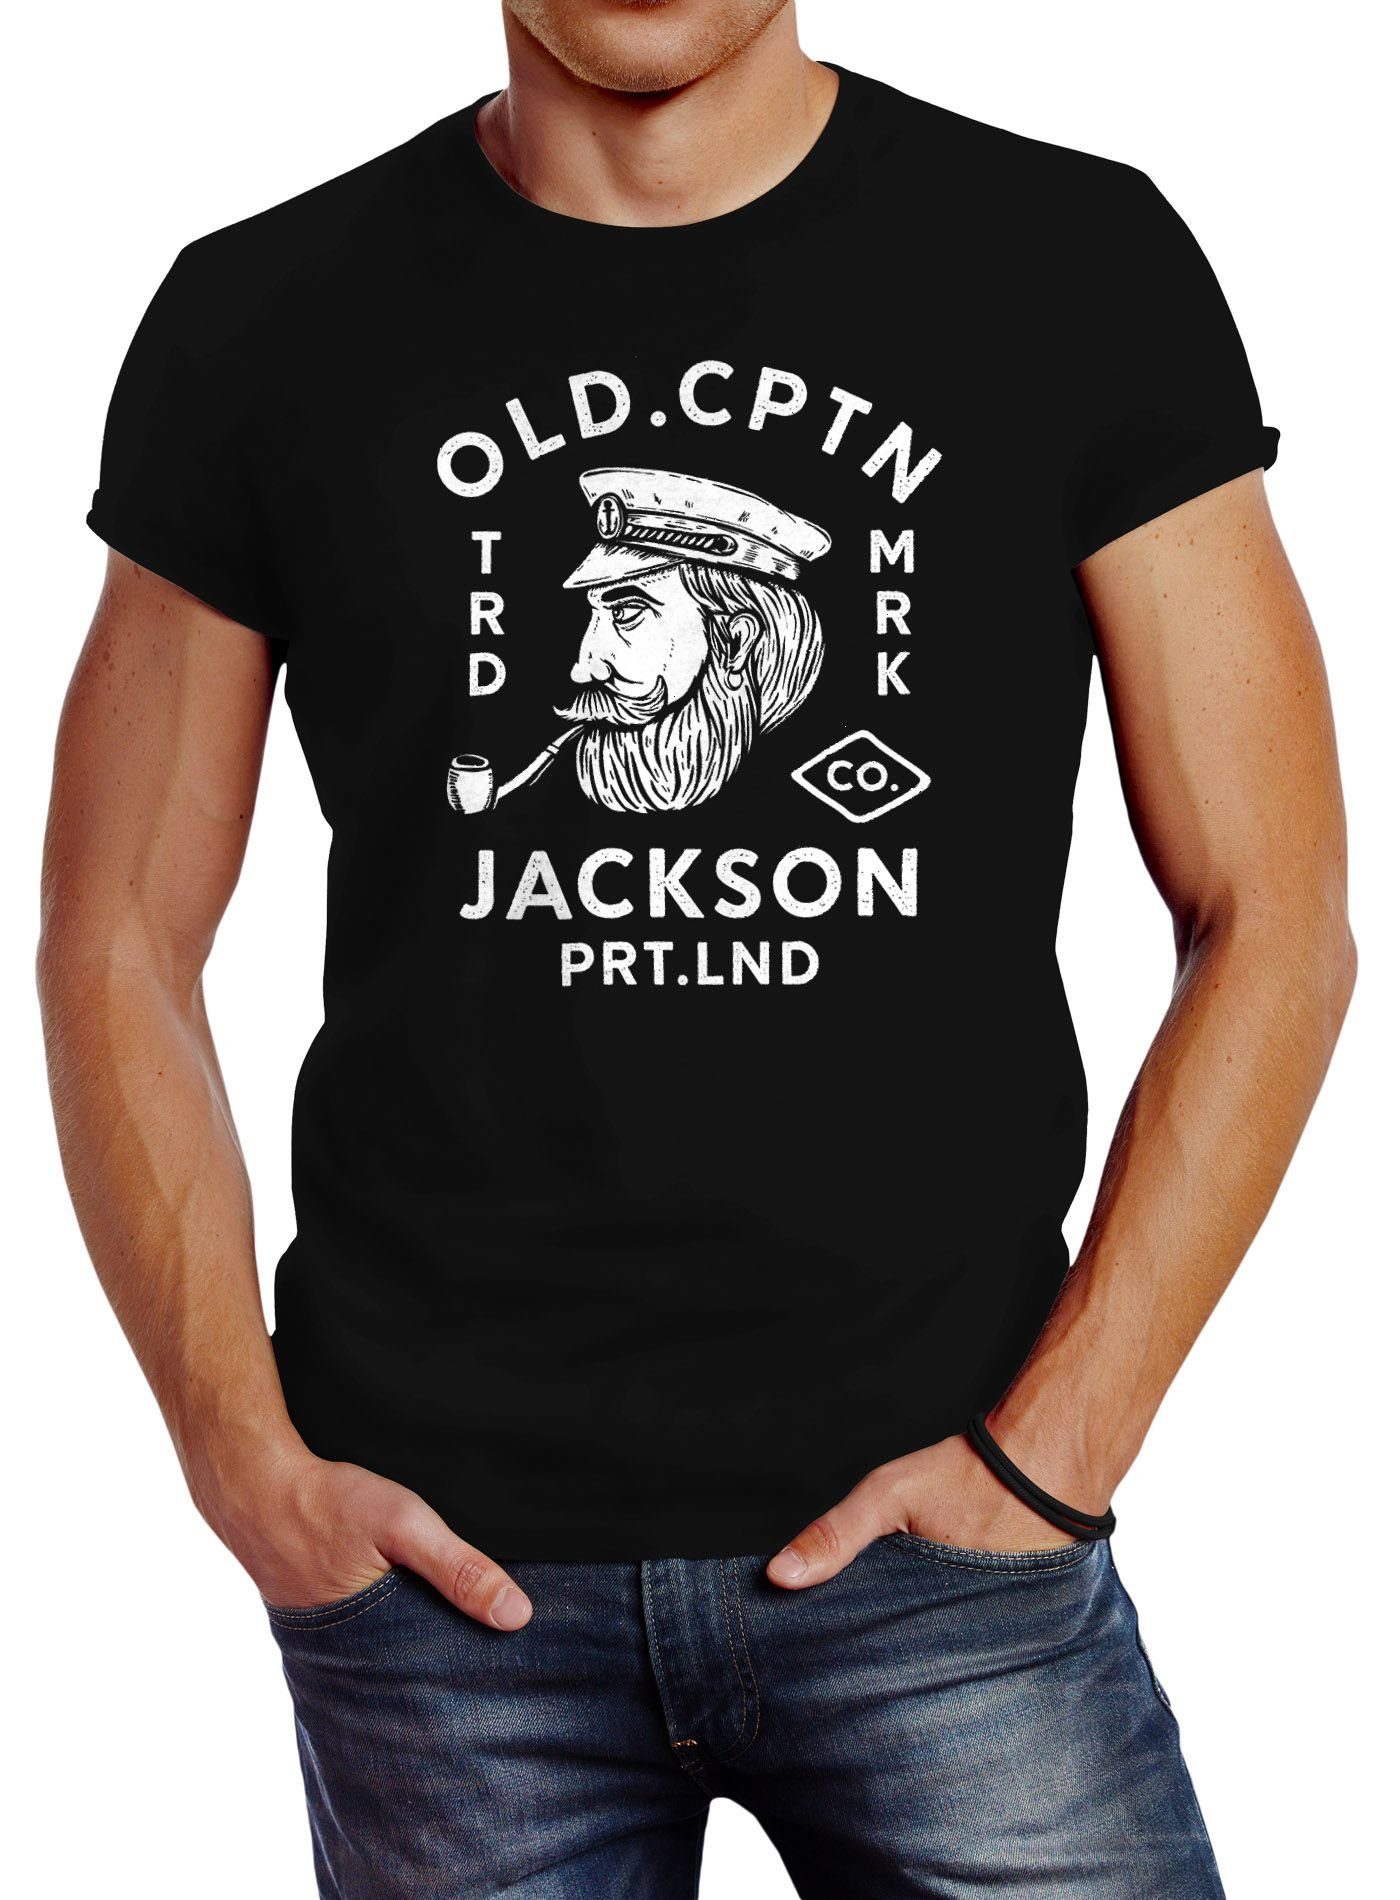 Neverless Print-Shirt Neverless® Herren T-Shirt Kapitän Motiv Aufdruck Old Cptn Jackson Retro Print-Shirt mit Print schwarz